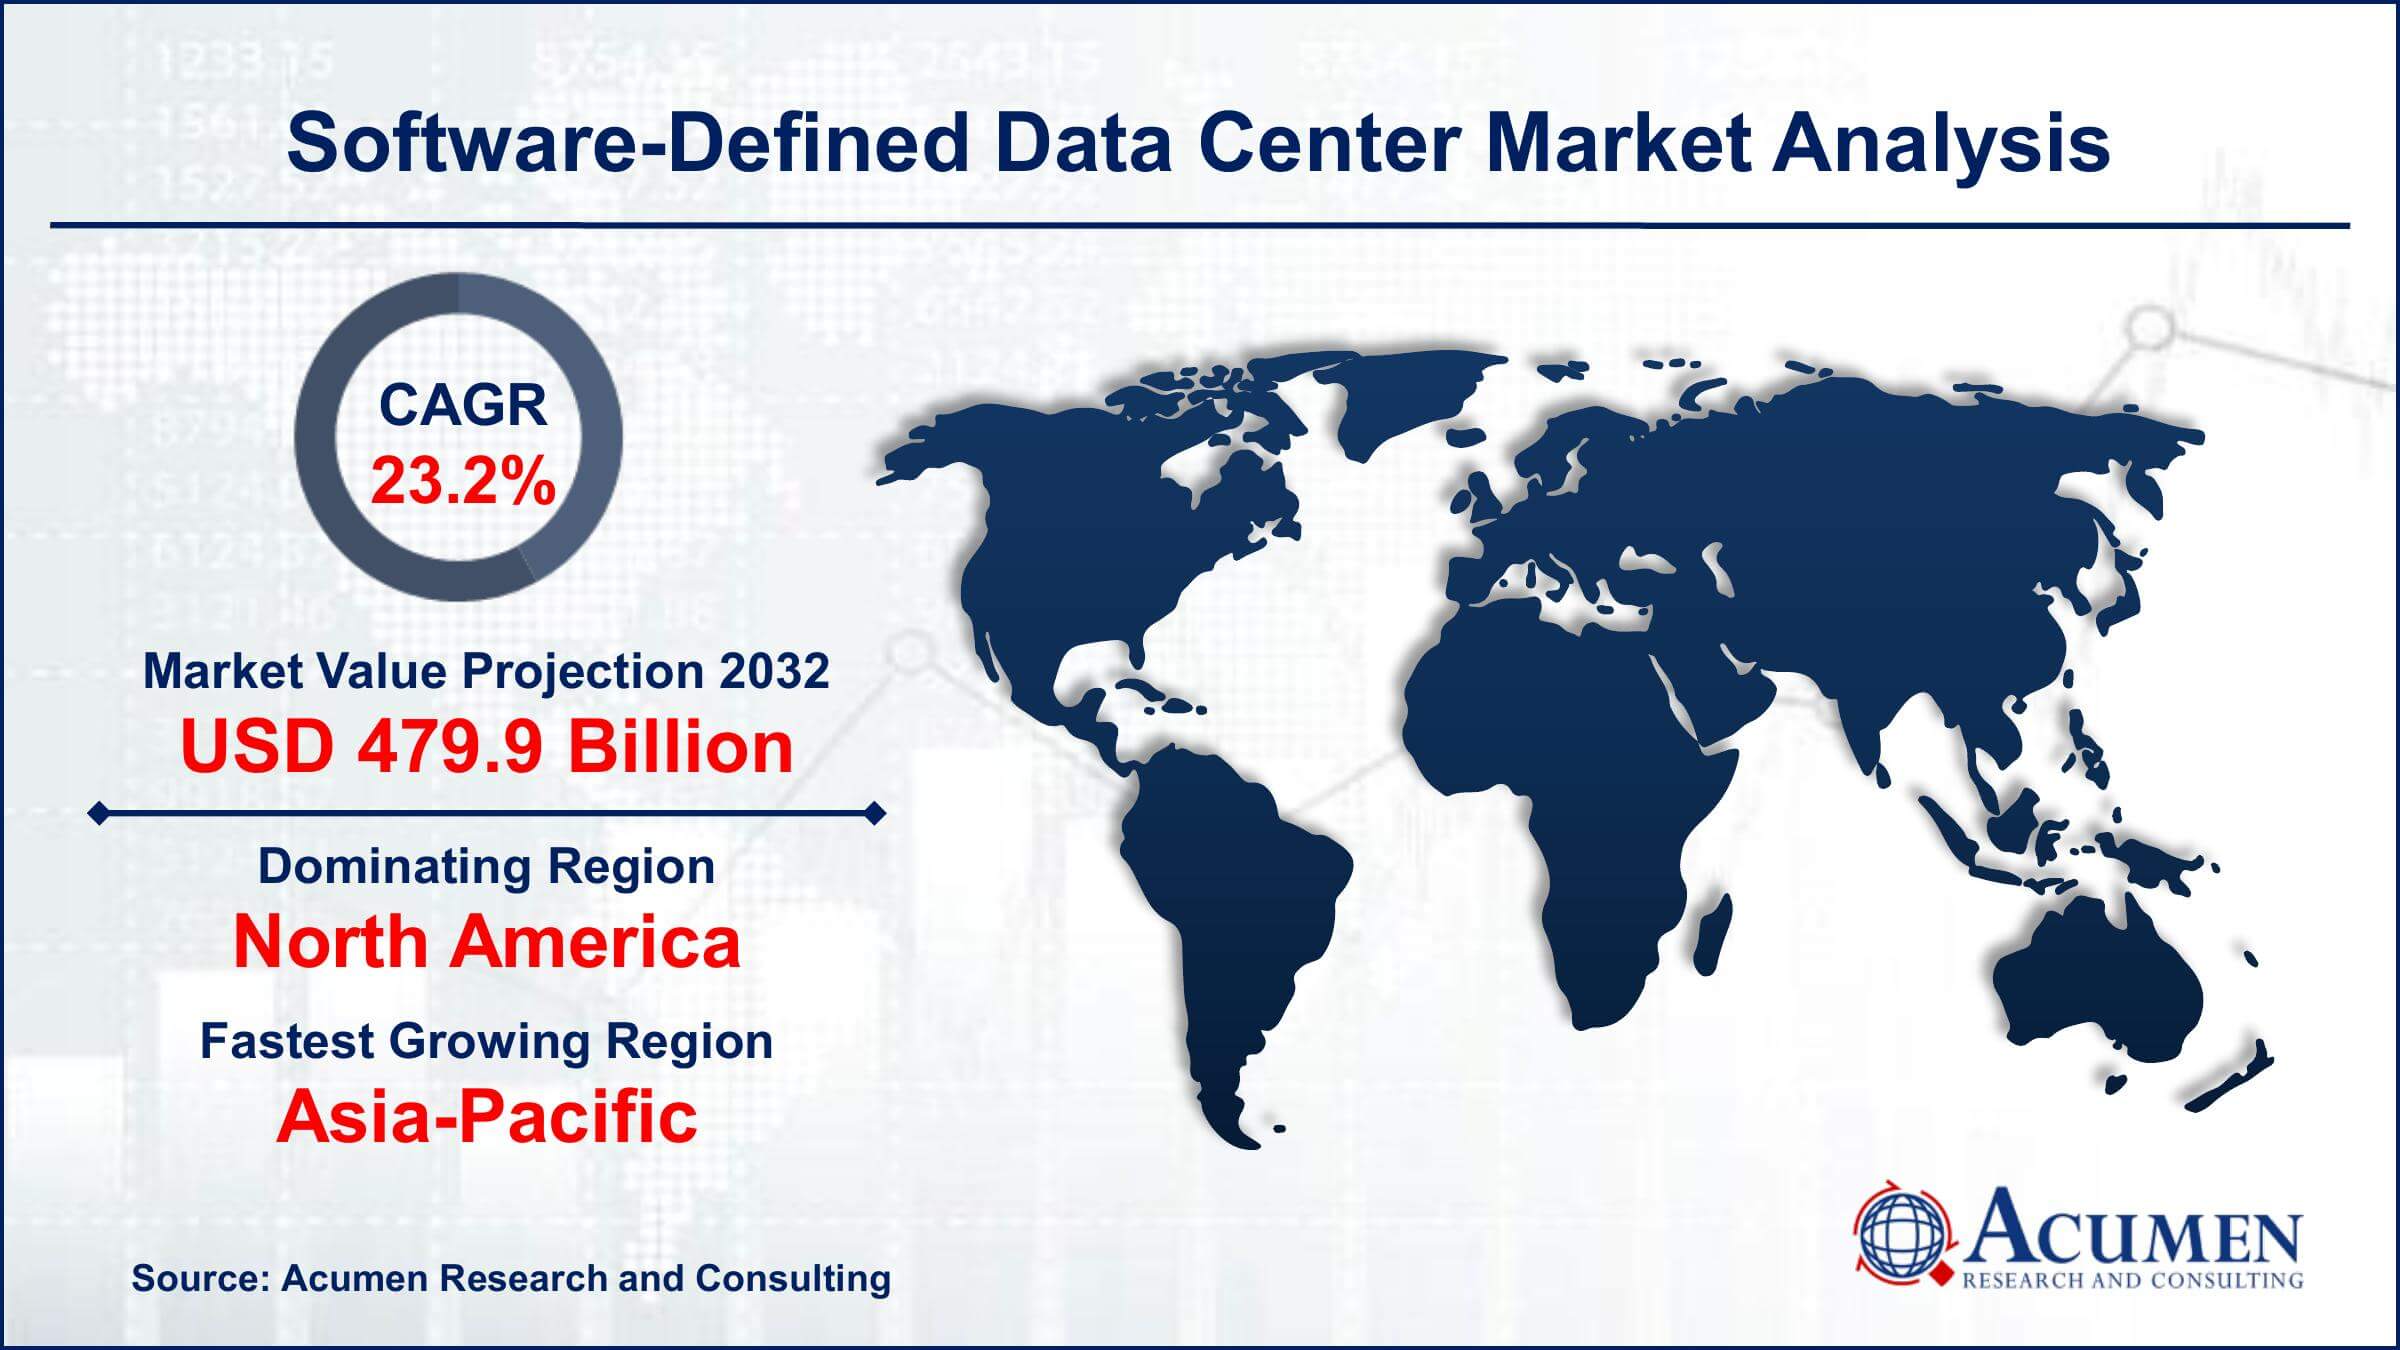 Global Software-Defined Data Center Market Trends